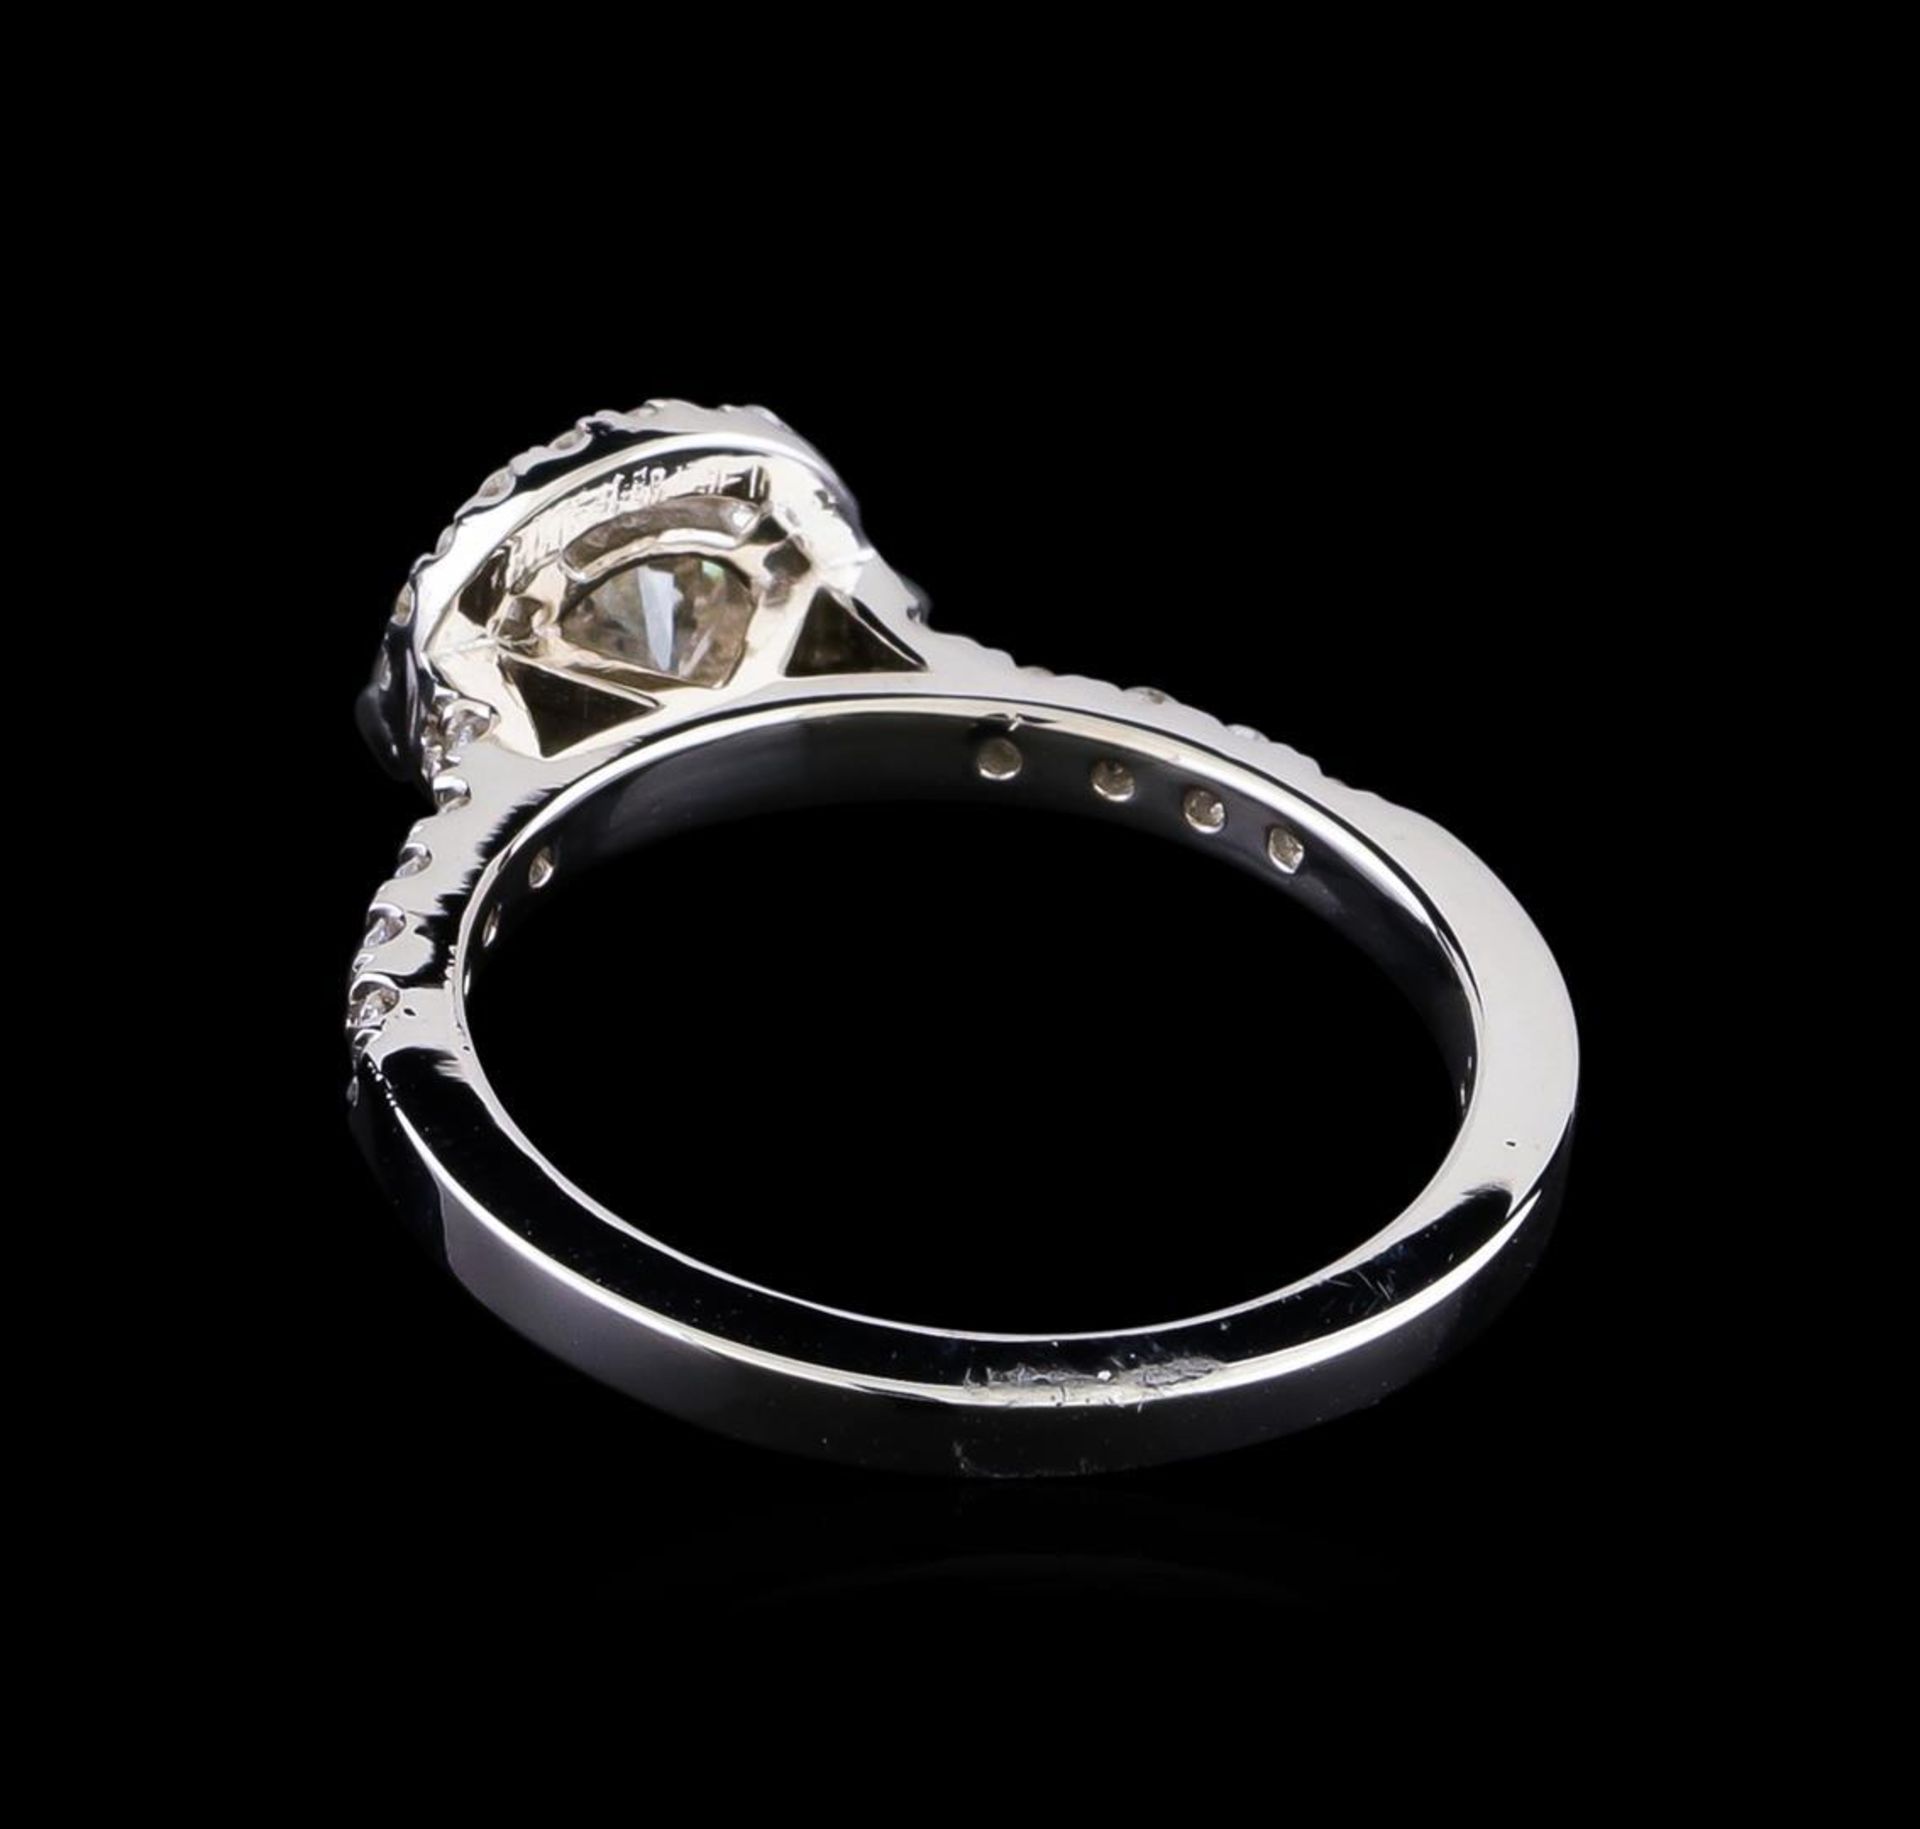 0.93 ctw Diamond Ring - 14KT White Gold - Image 3 of 5